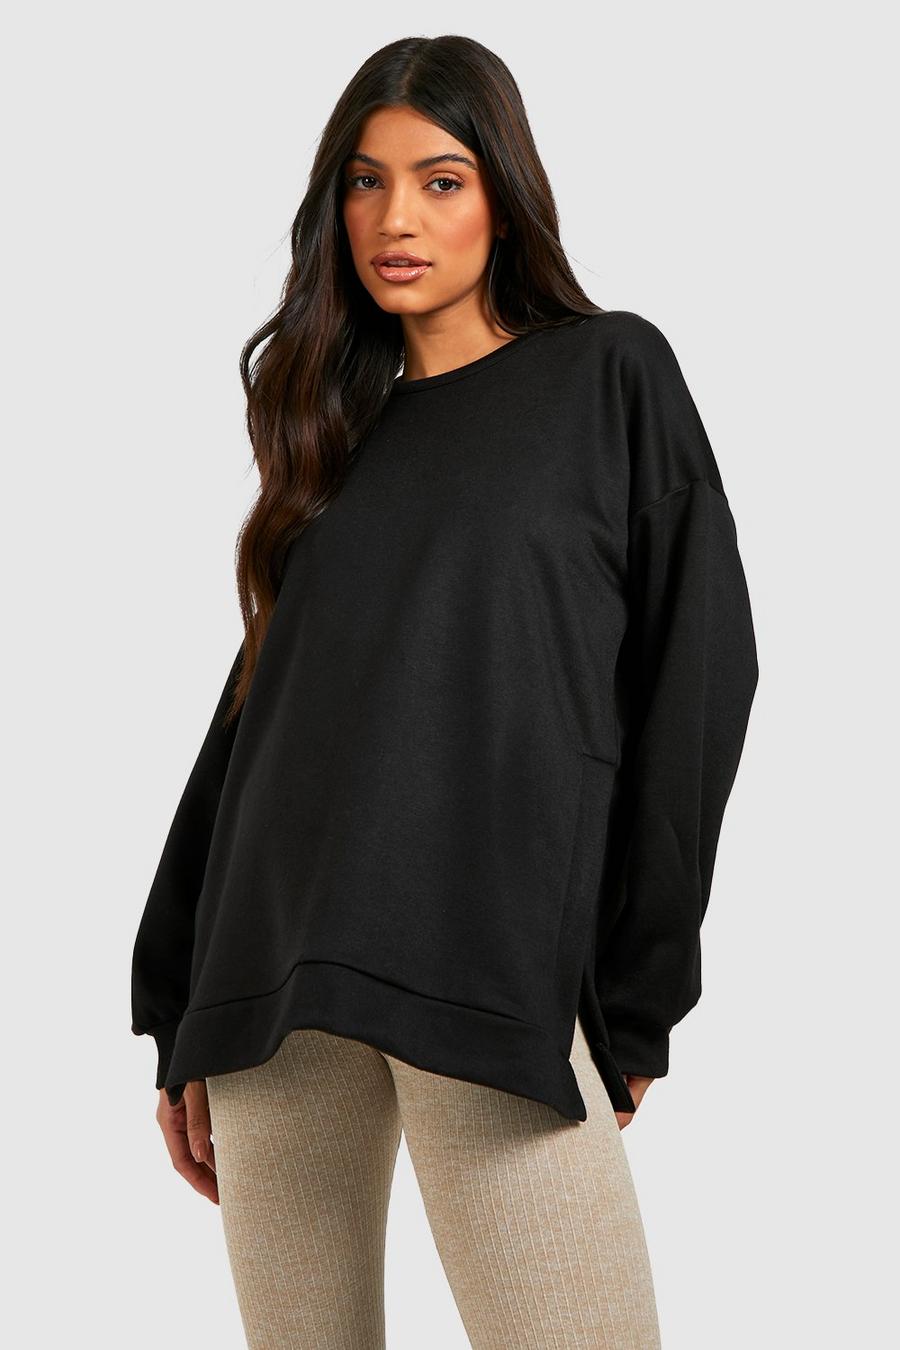 Hoodies & Sweatshirts | Zip & Pullover Sweaters | boohoo NZ